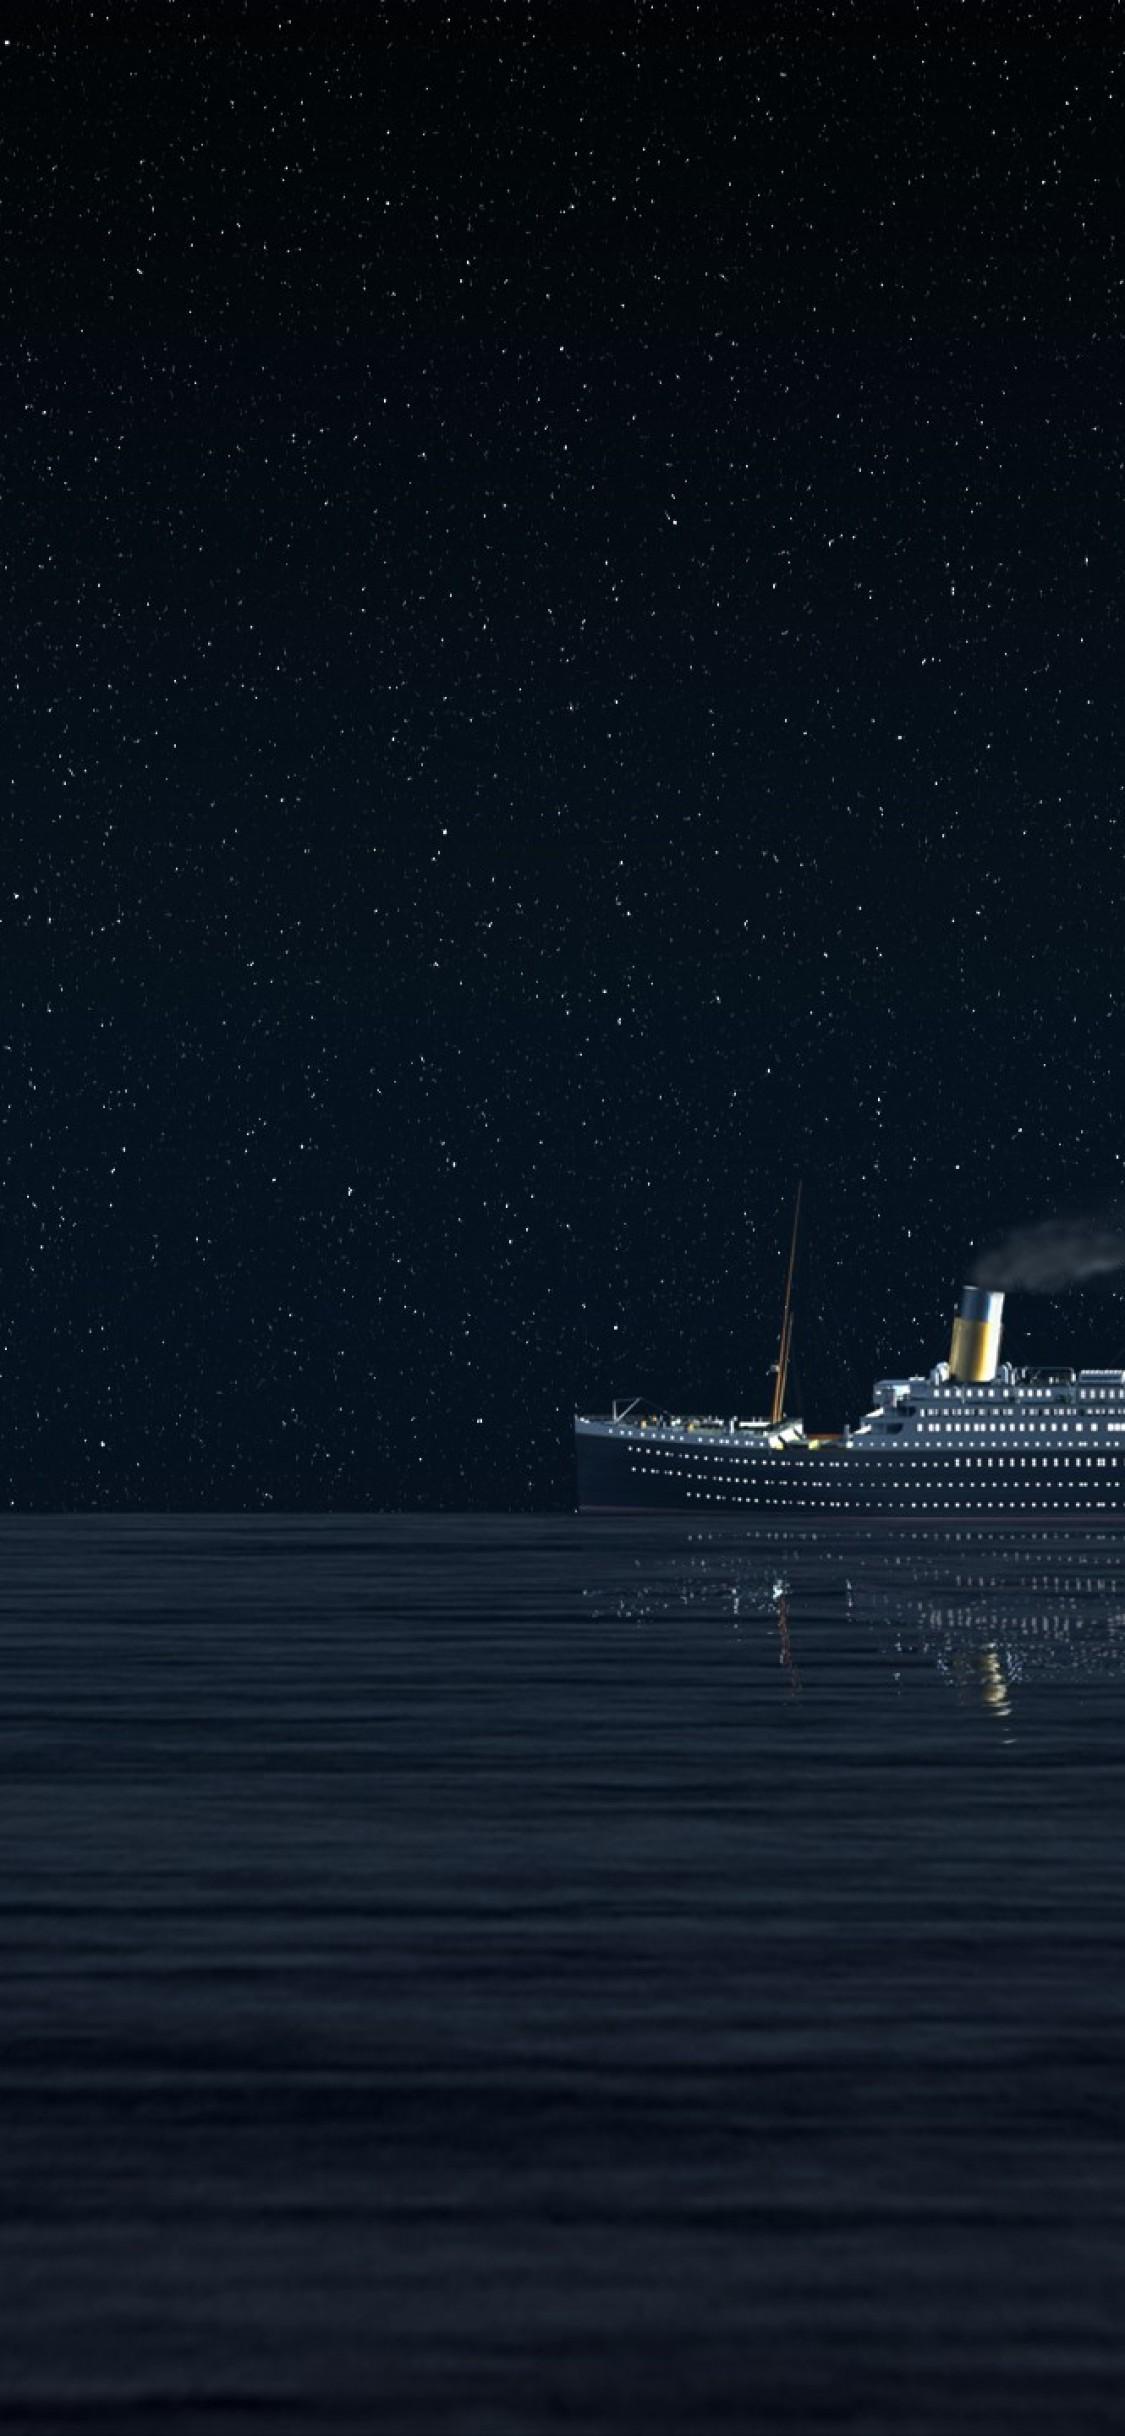 Titanic iPhone X Wallpaper Download